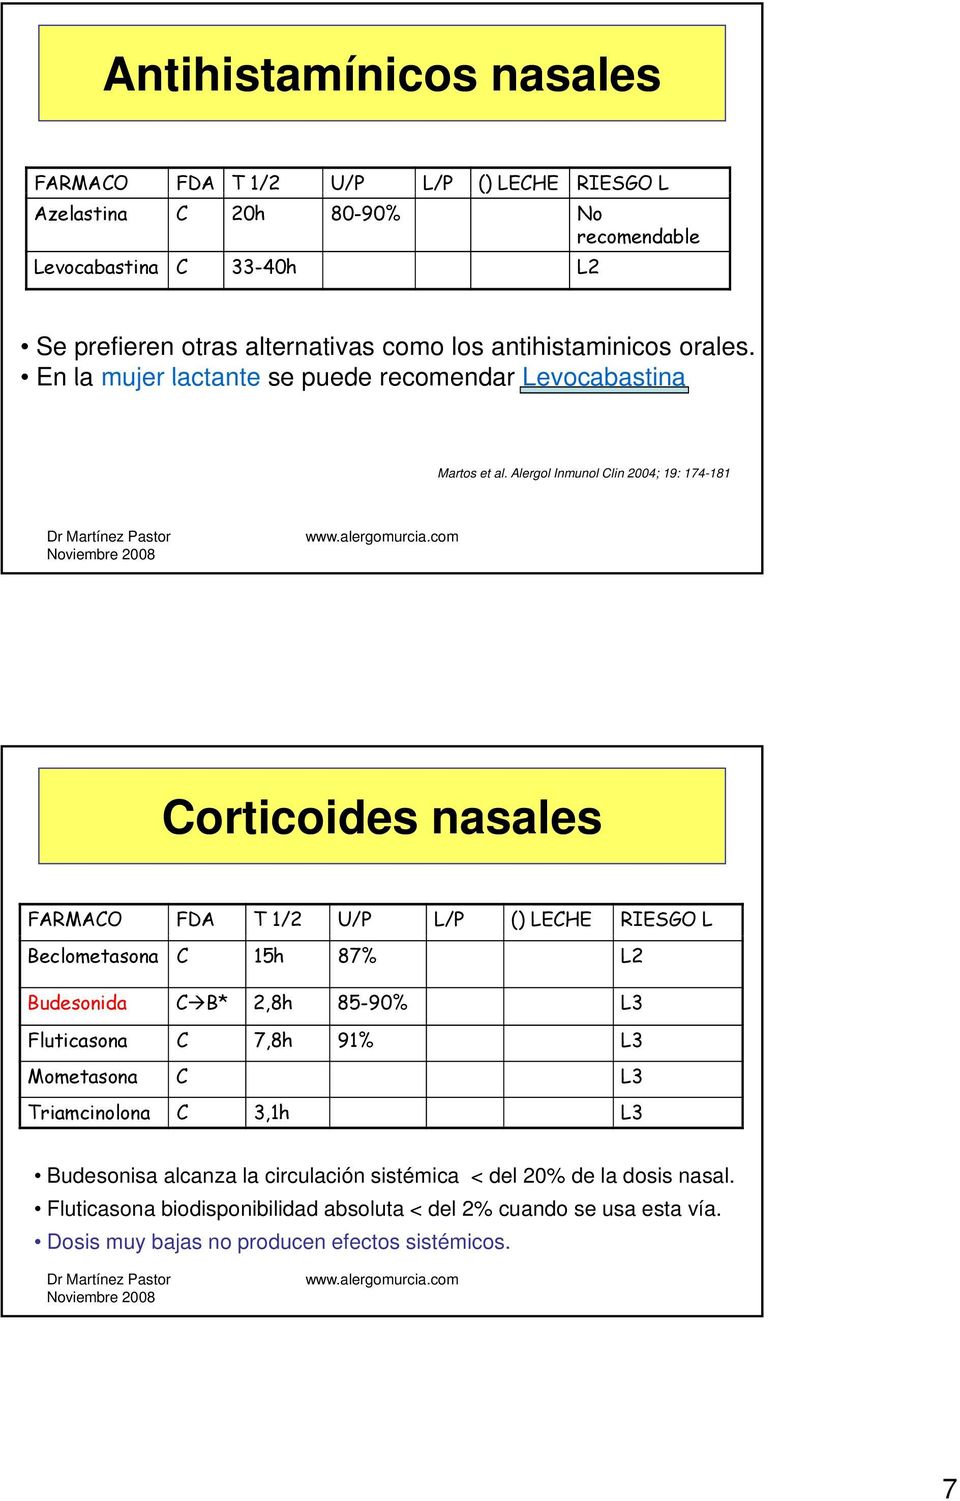 Alergol Inmunol Clin 2004; 19: 174-181 Corticoides nasales Beclometasona C 15h 87% L2 Budesonida C B* 2,8h 85-90% L3 Fluticasona C 7,8h 91% L3